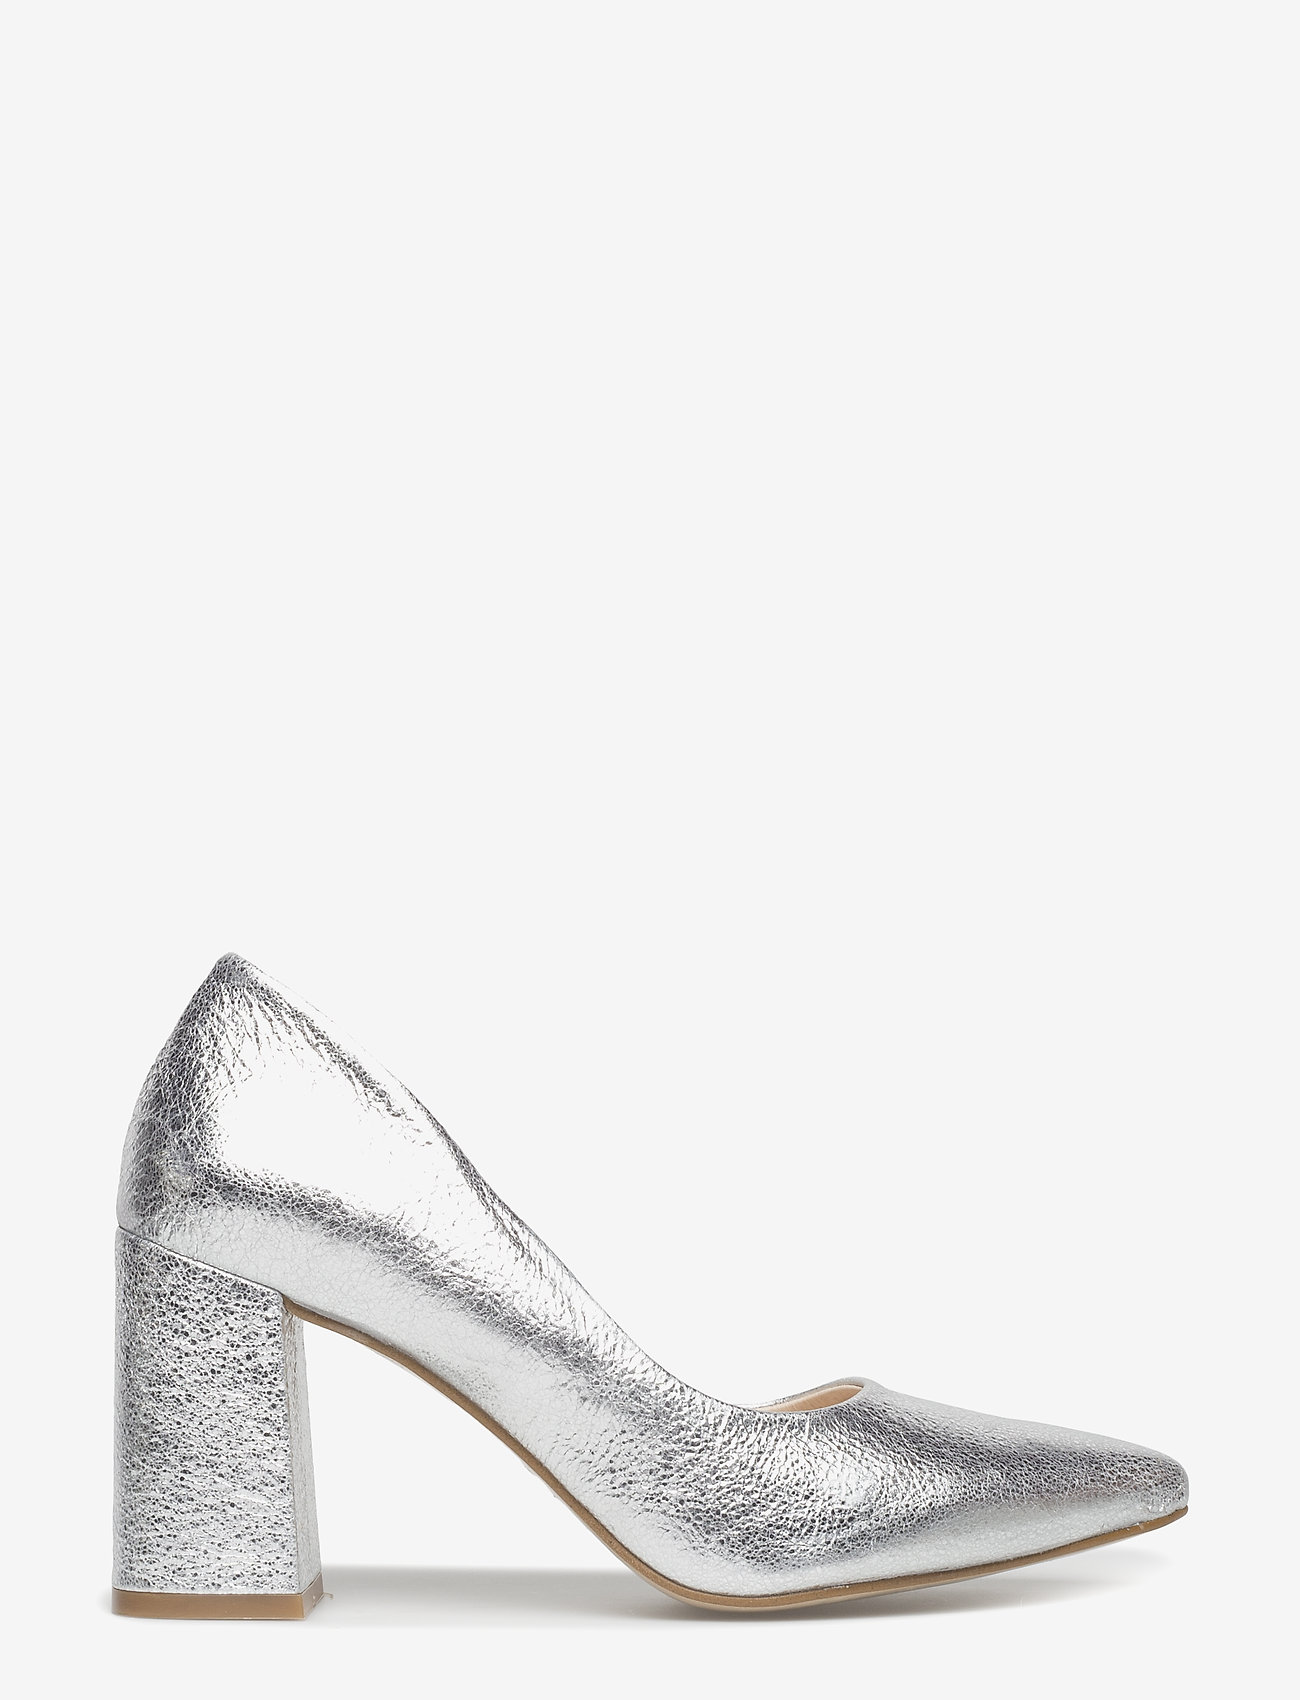 Jane L (Silver) (41.99 €) - Shoe The 